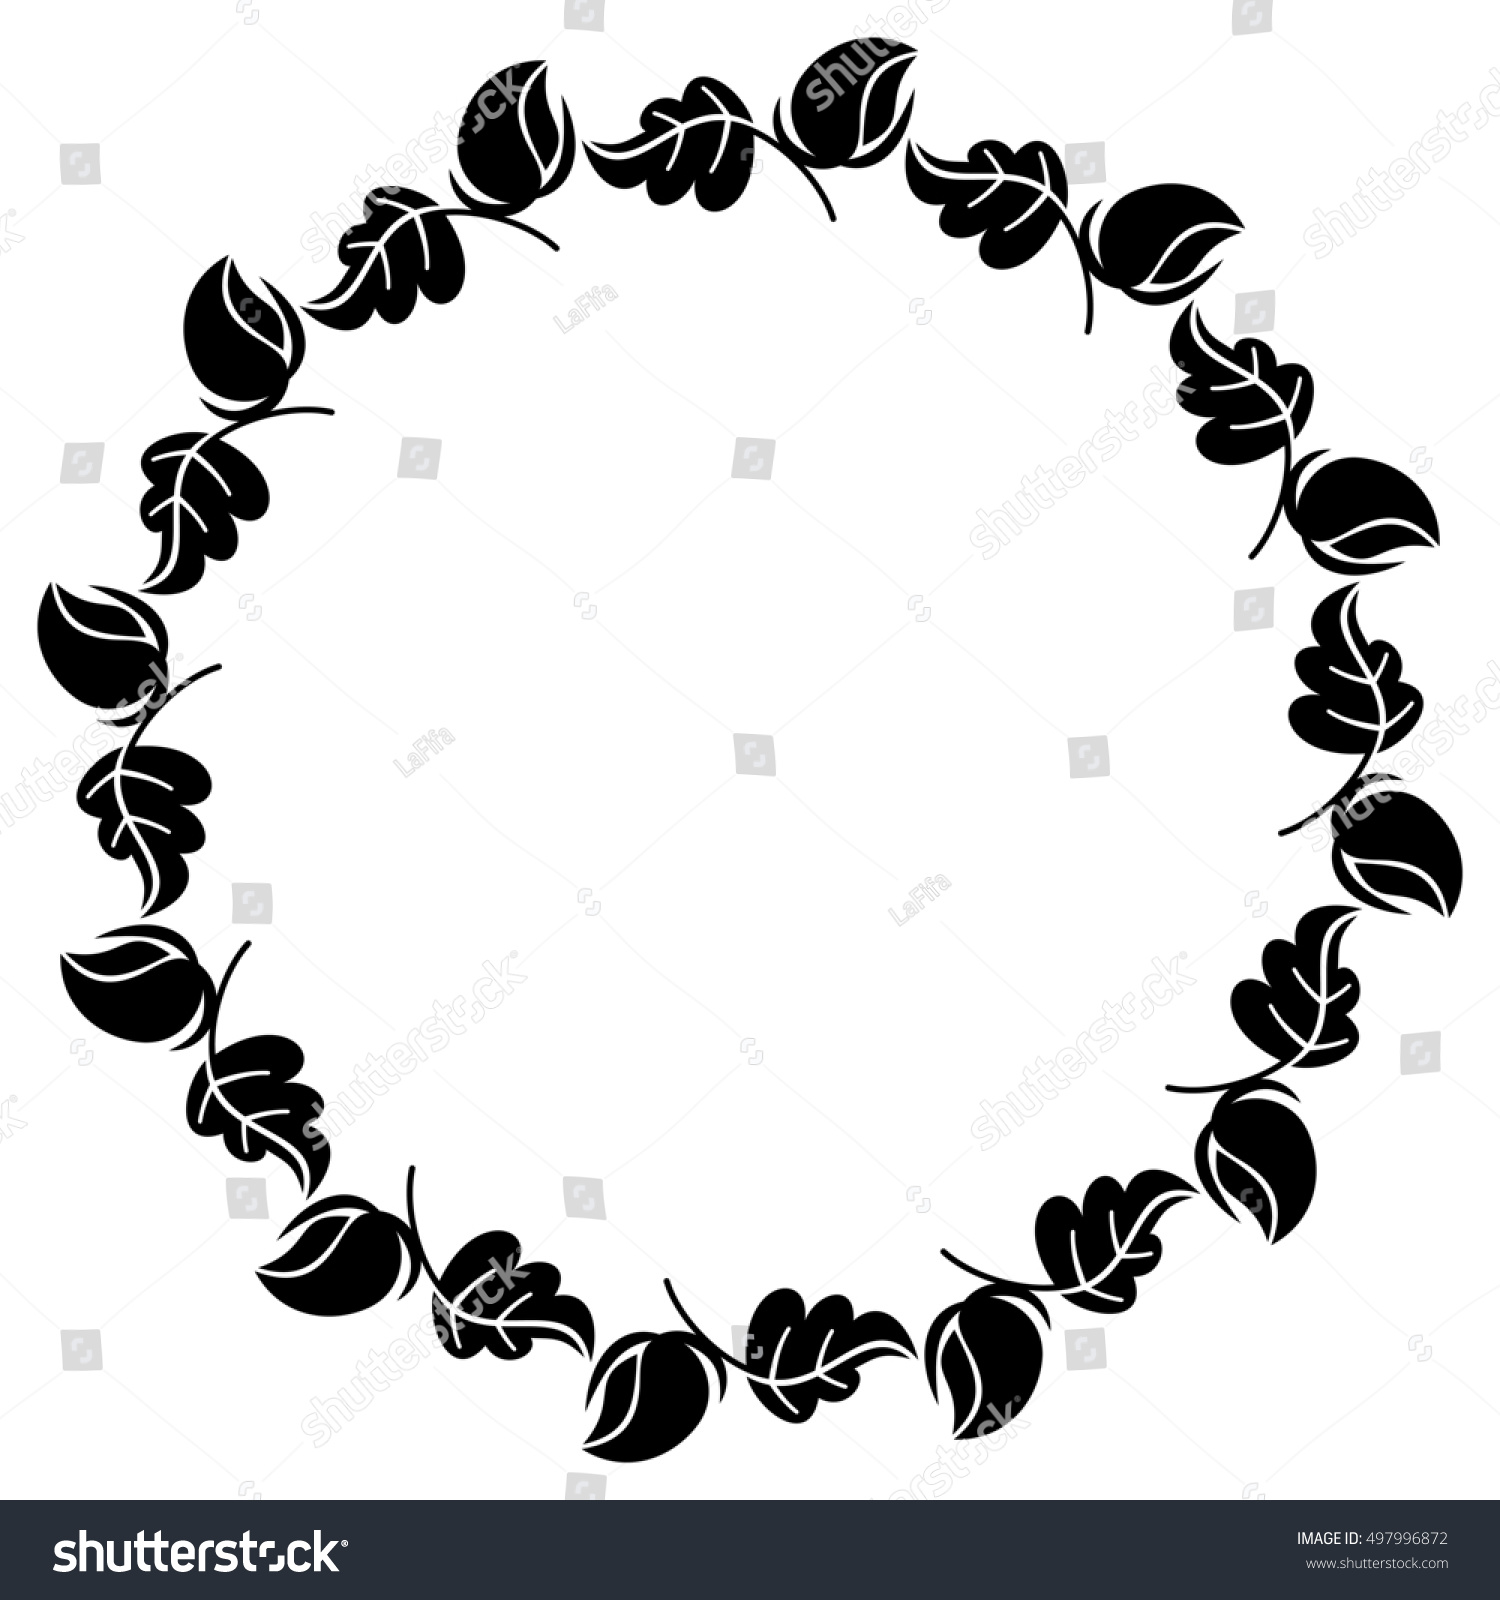 Silhouette Round Floral Frame Raster Clip Stock Illustration 497996872